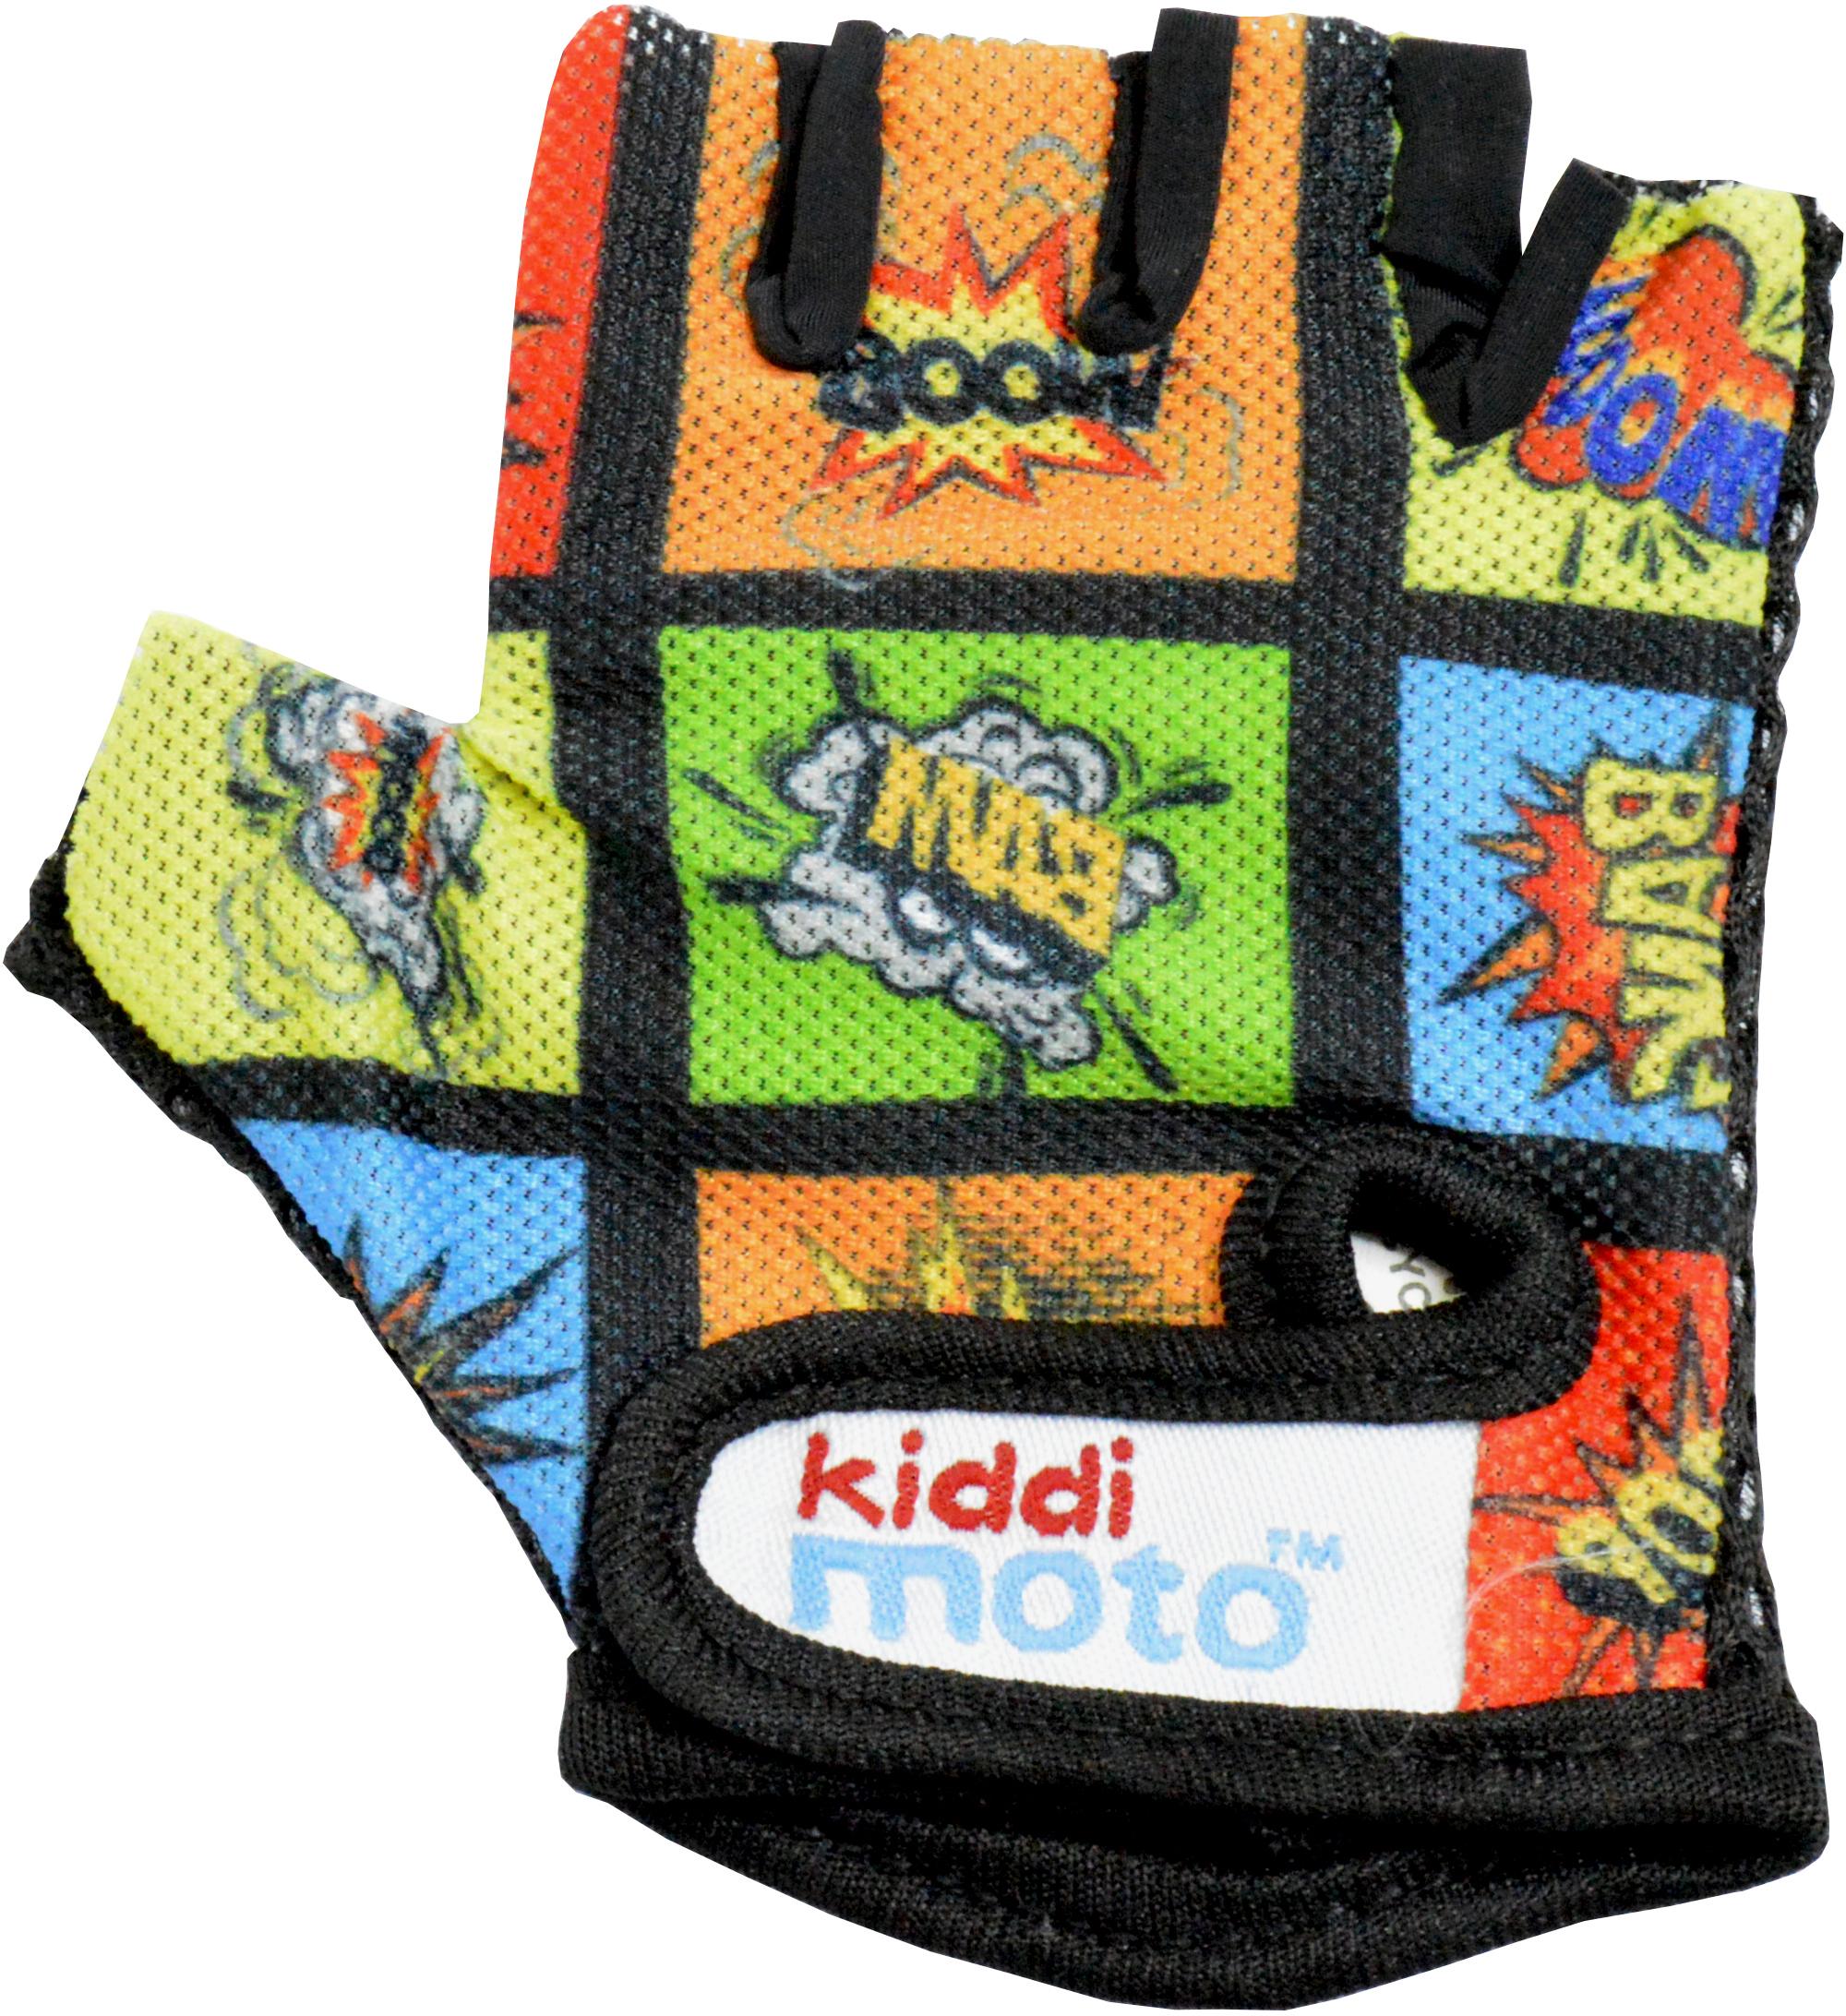 Kiddimoto Comic Gloves Small